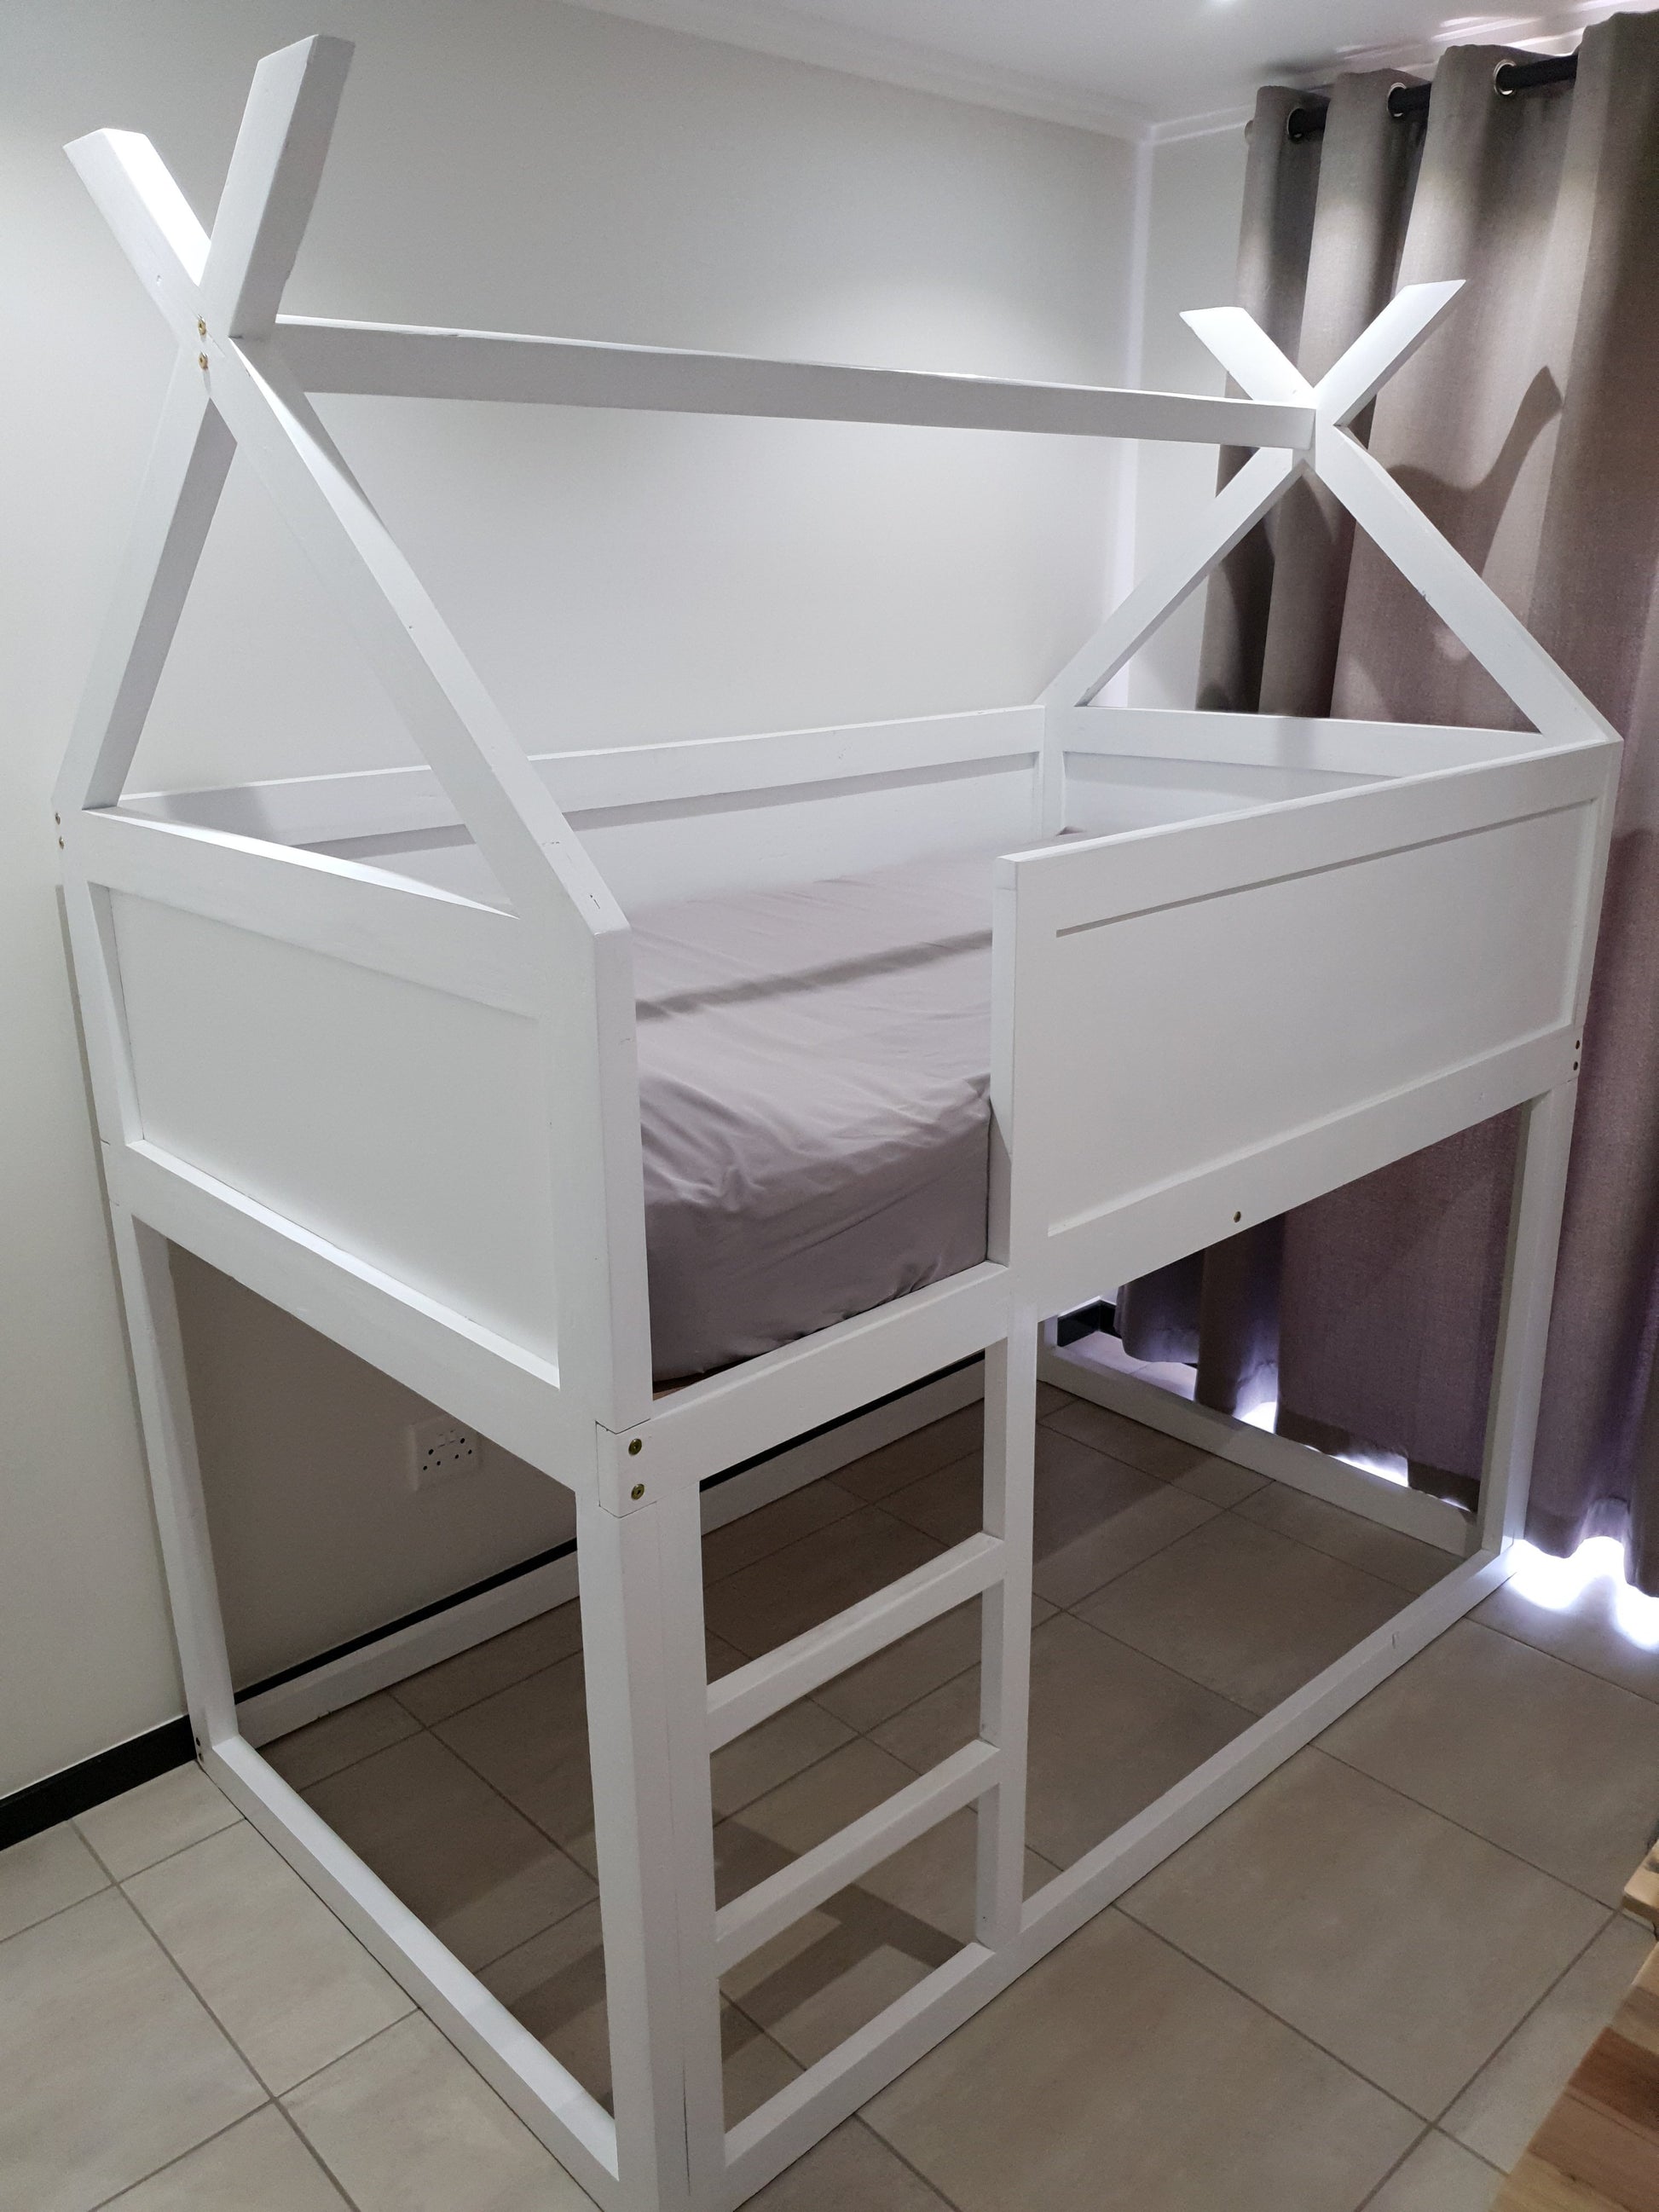 TeePee Bunk Bed - Furniture